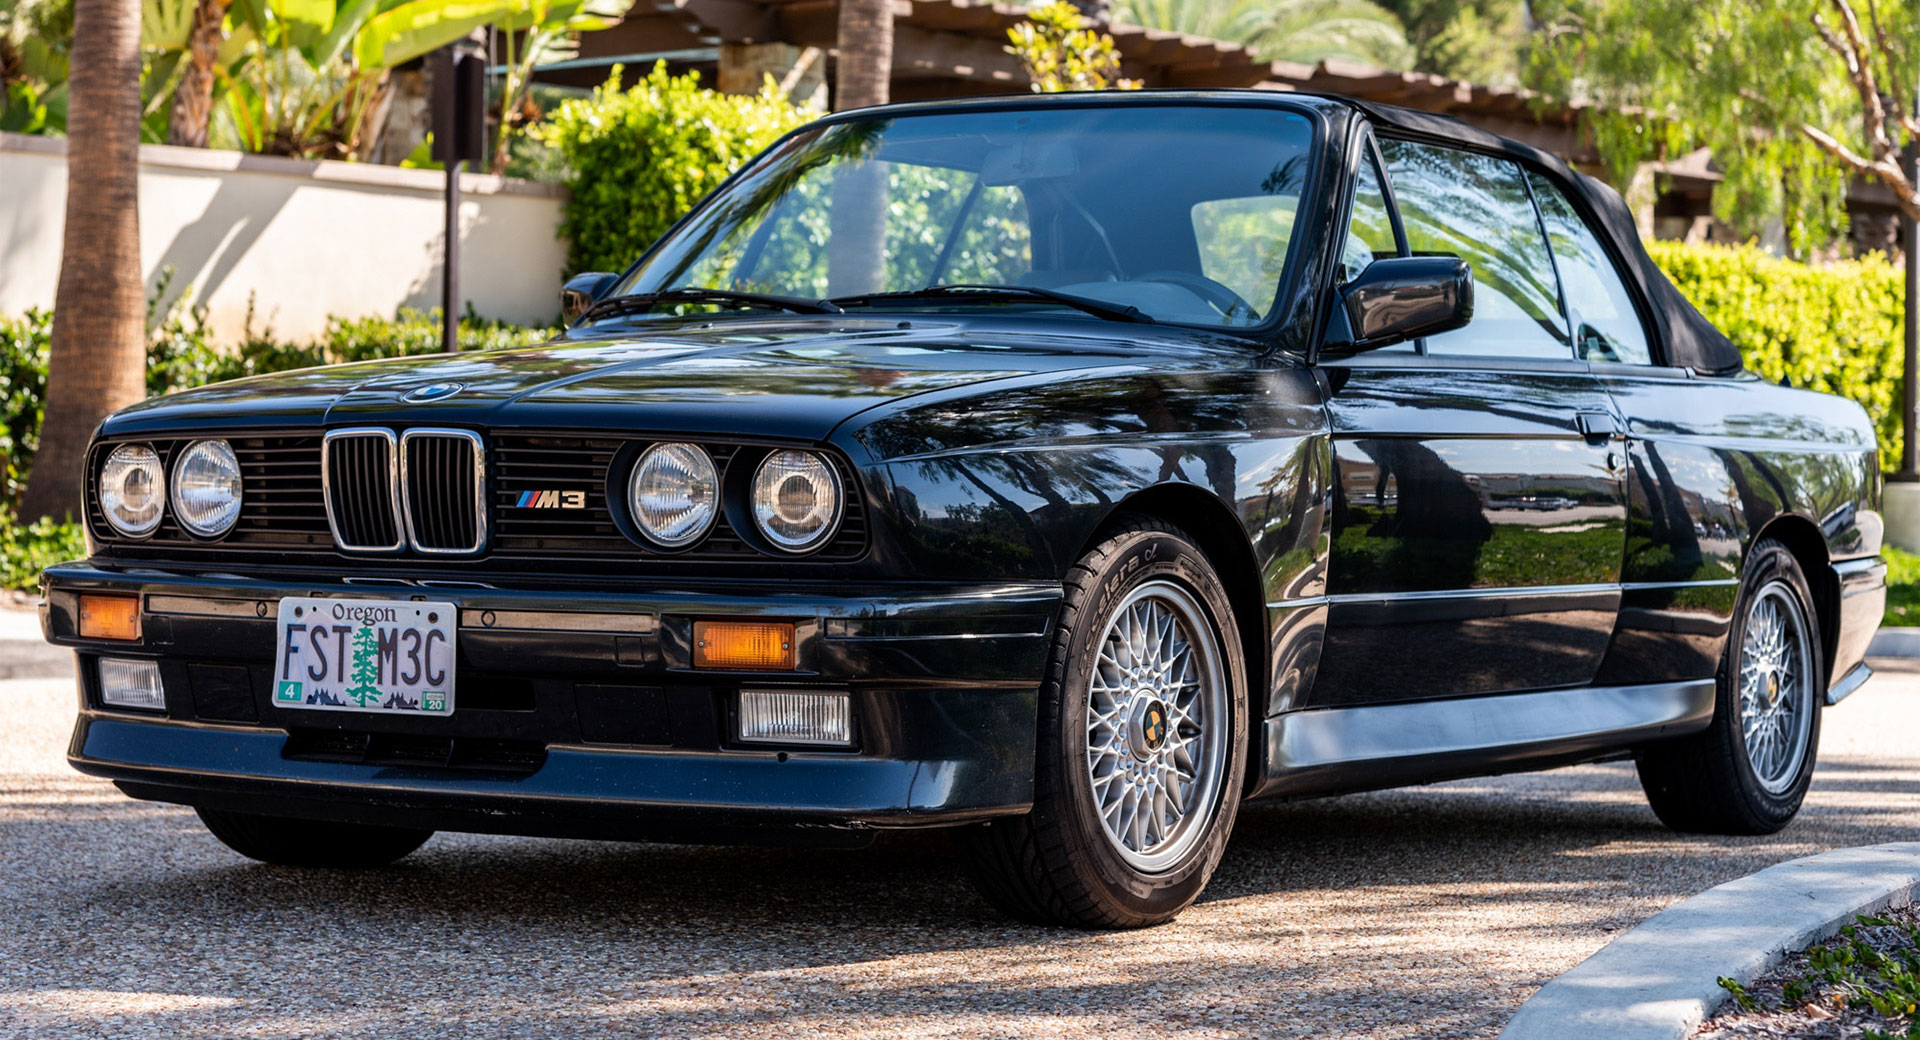 What's Not To Love About A BMW E30 M3 With A 405 HP 3.5-Liter Turbo Six?